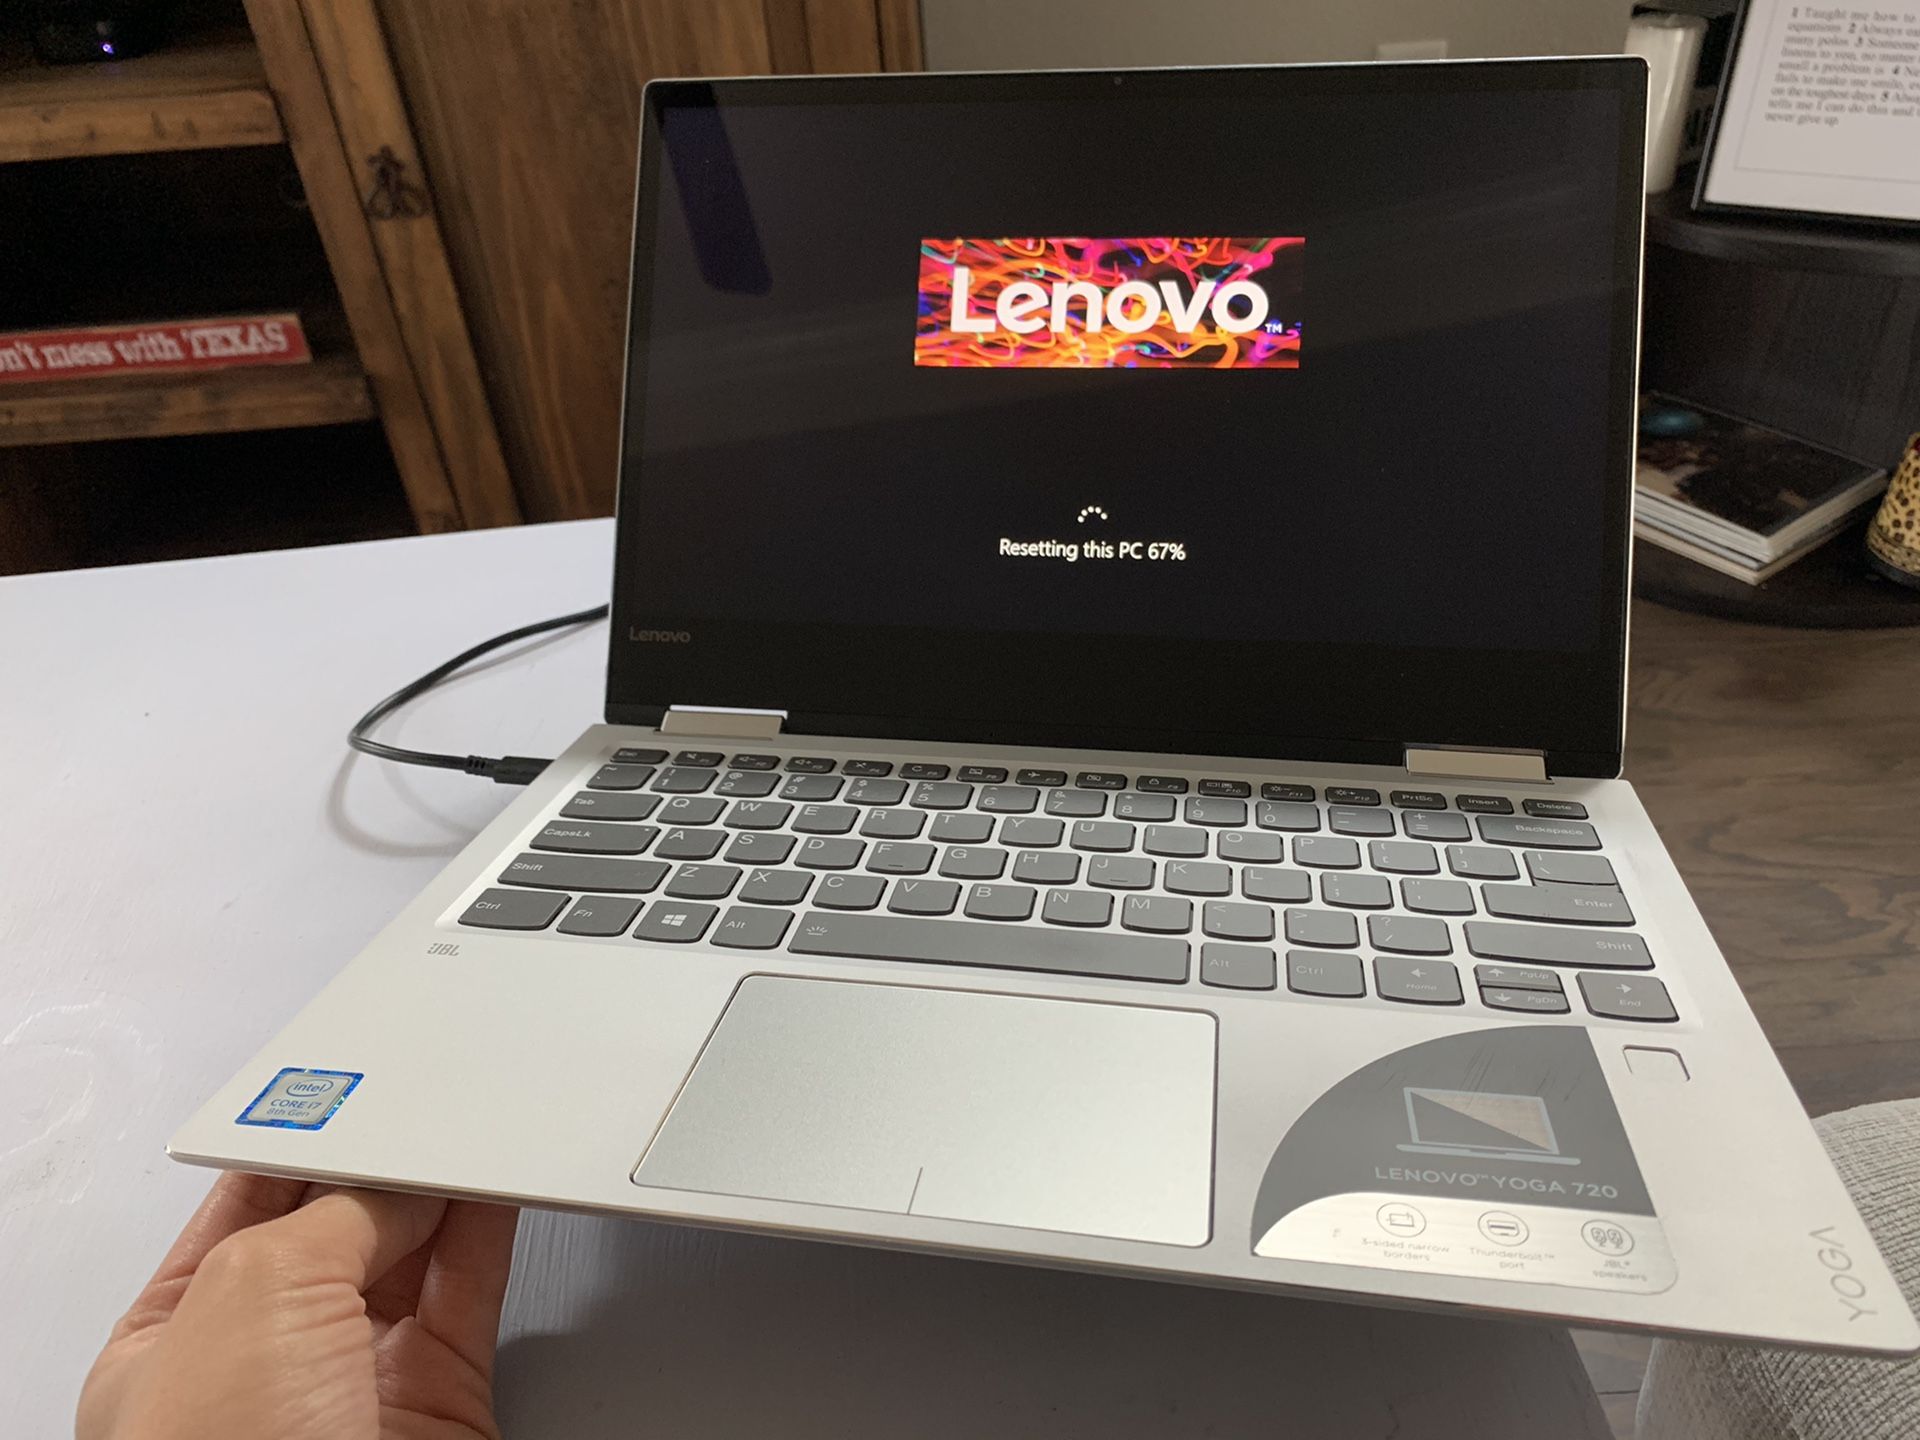 Lenovo Yoga 720 13 inch